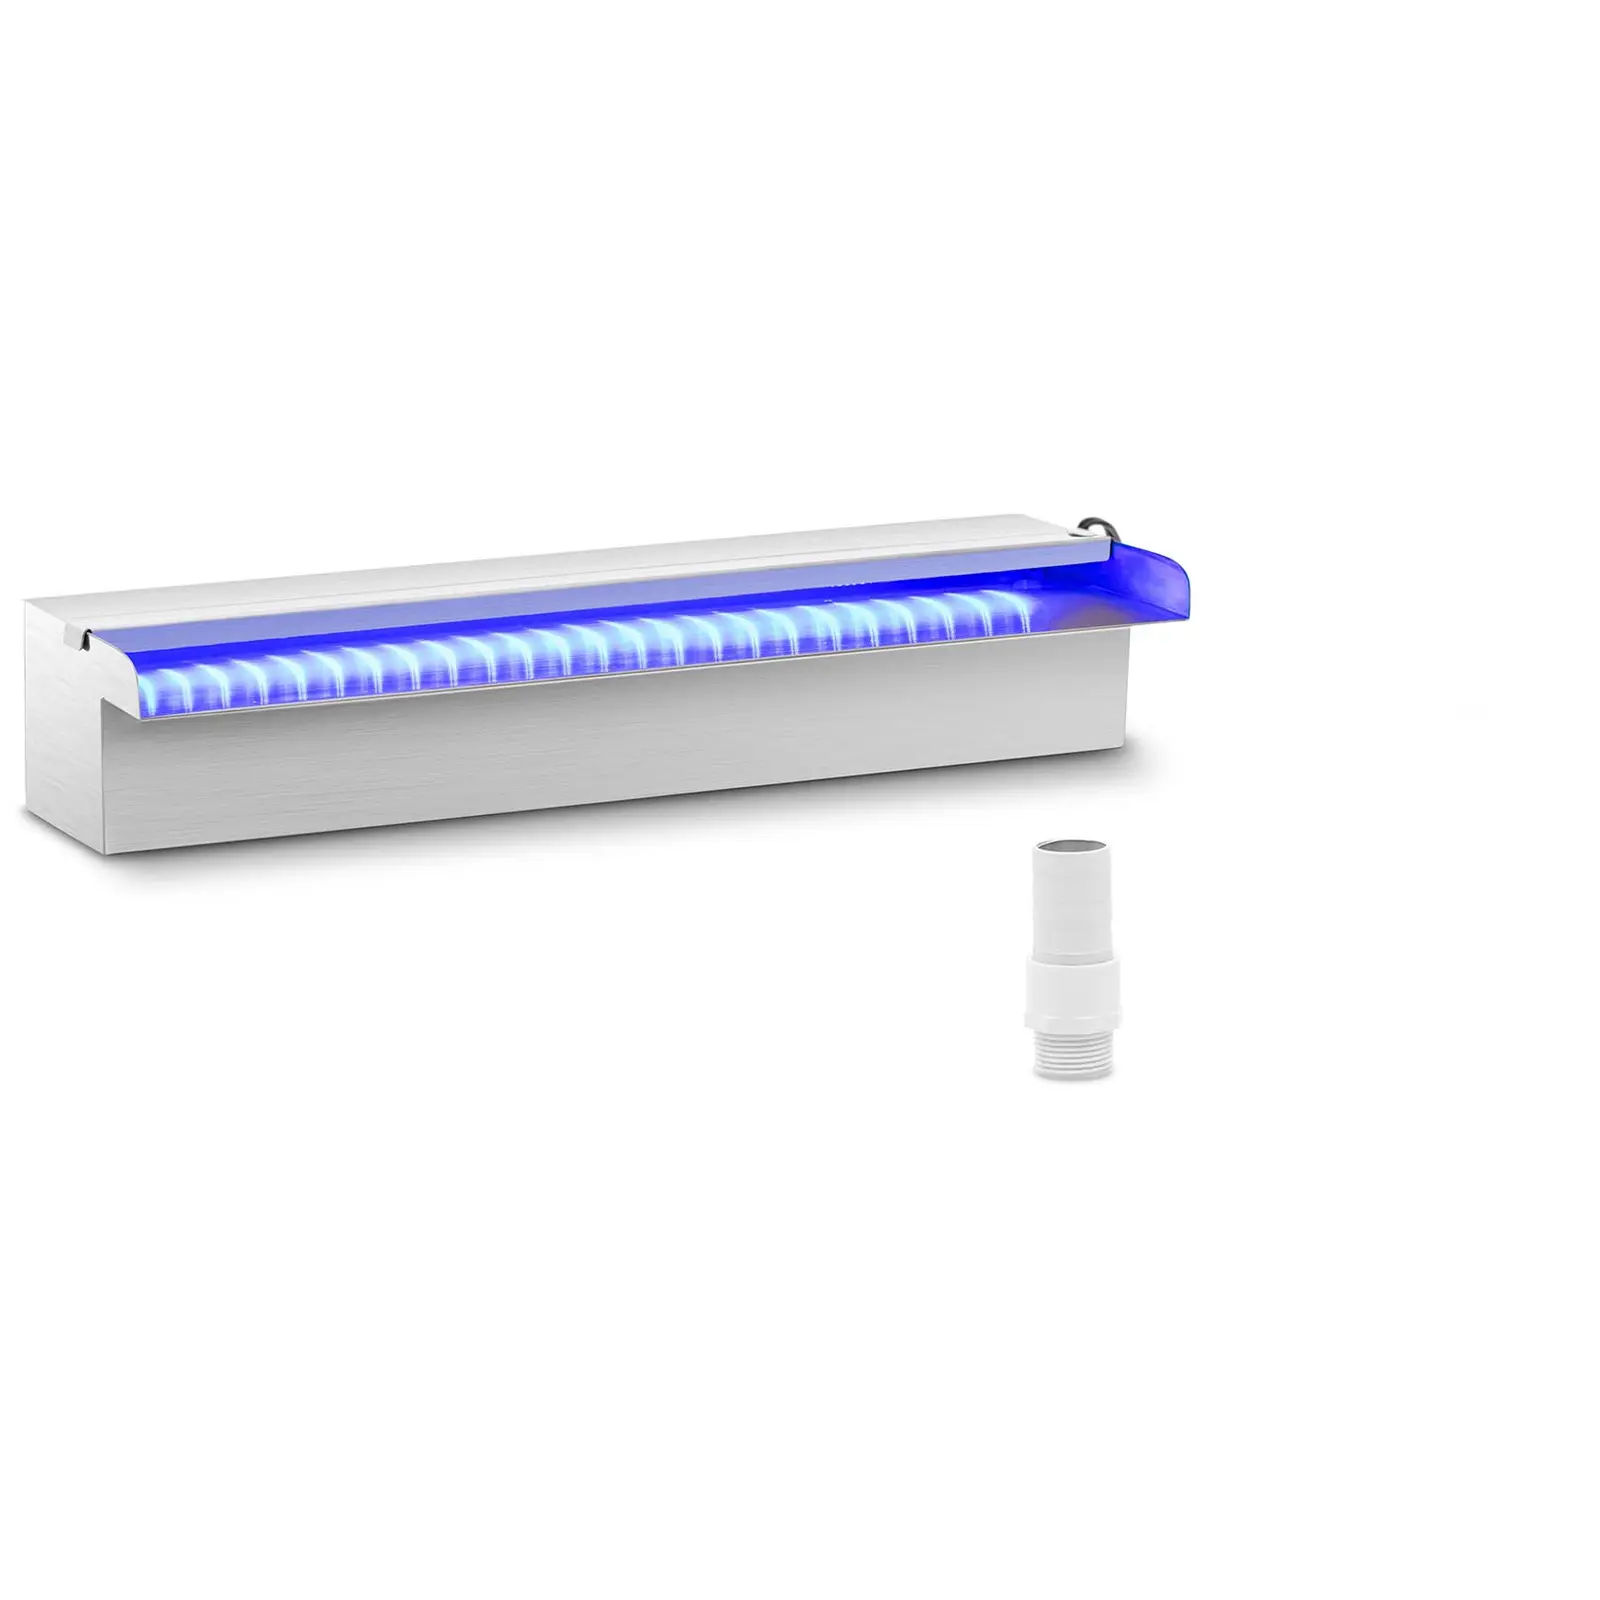 Cascata da giardino - 45 cm - Illuminazione LED - Blu, bianca